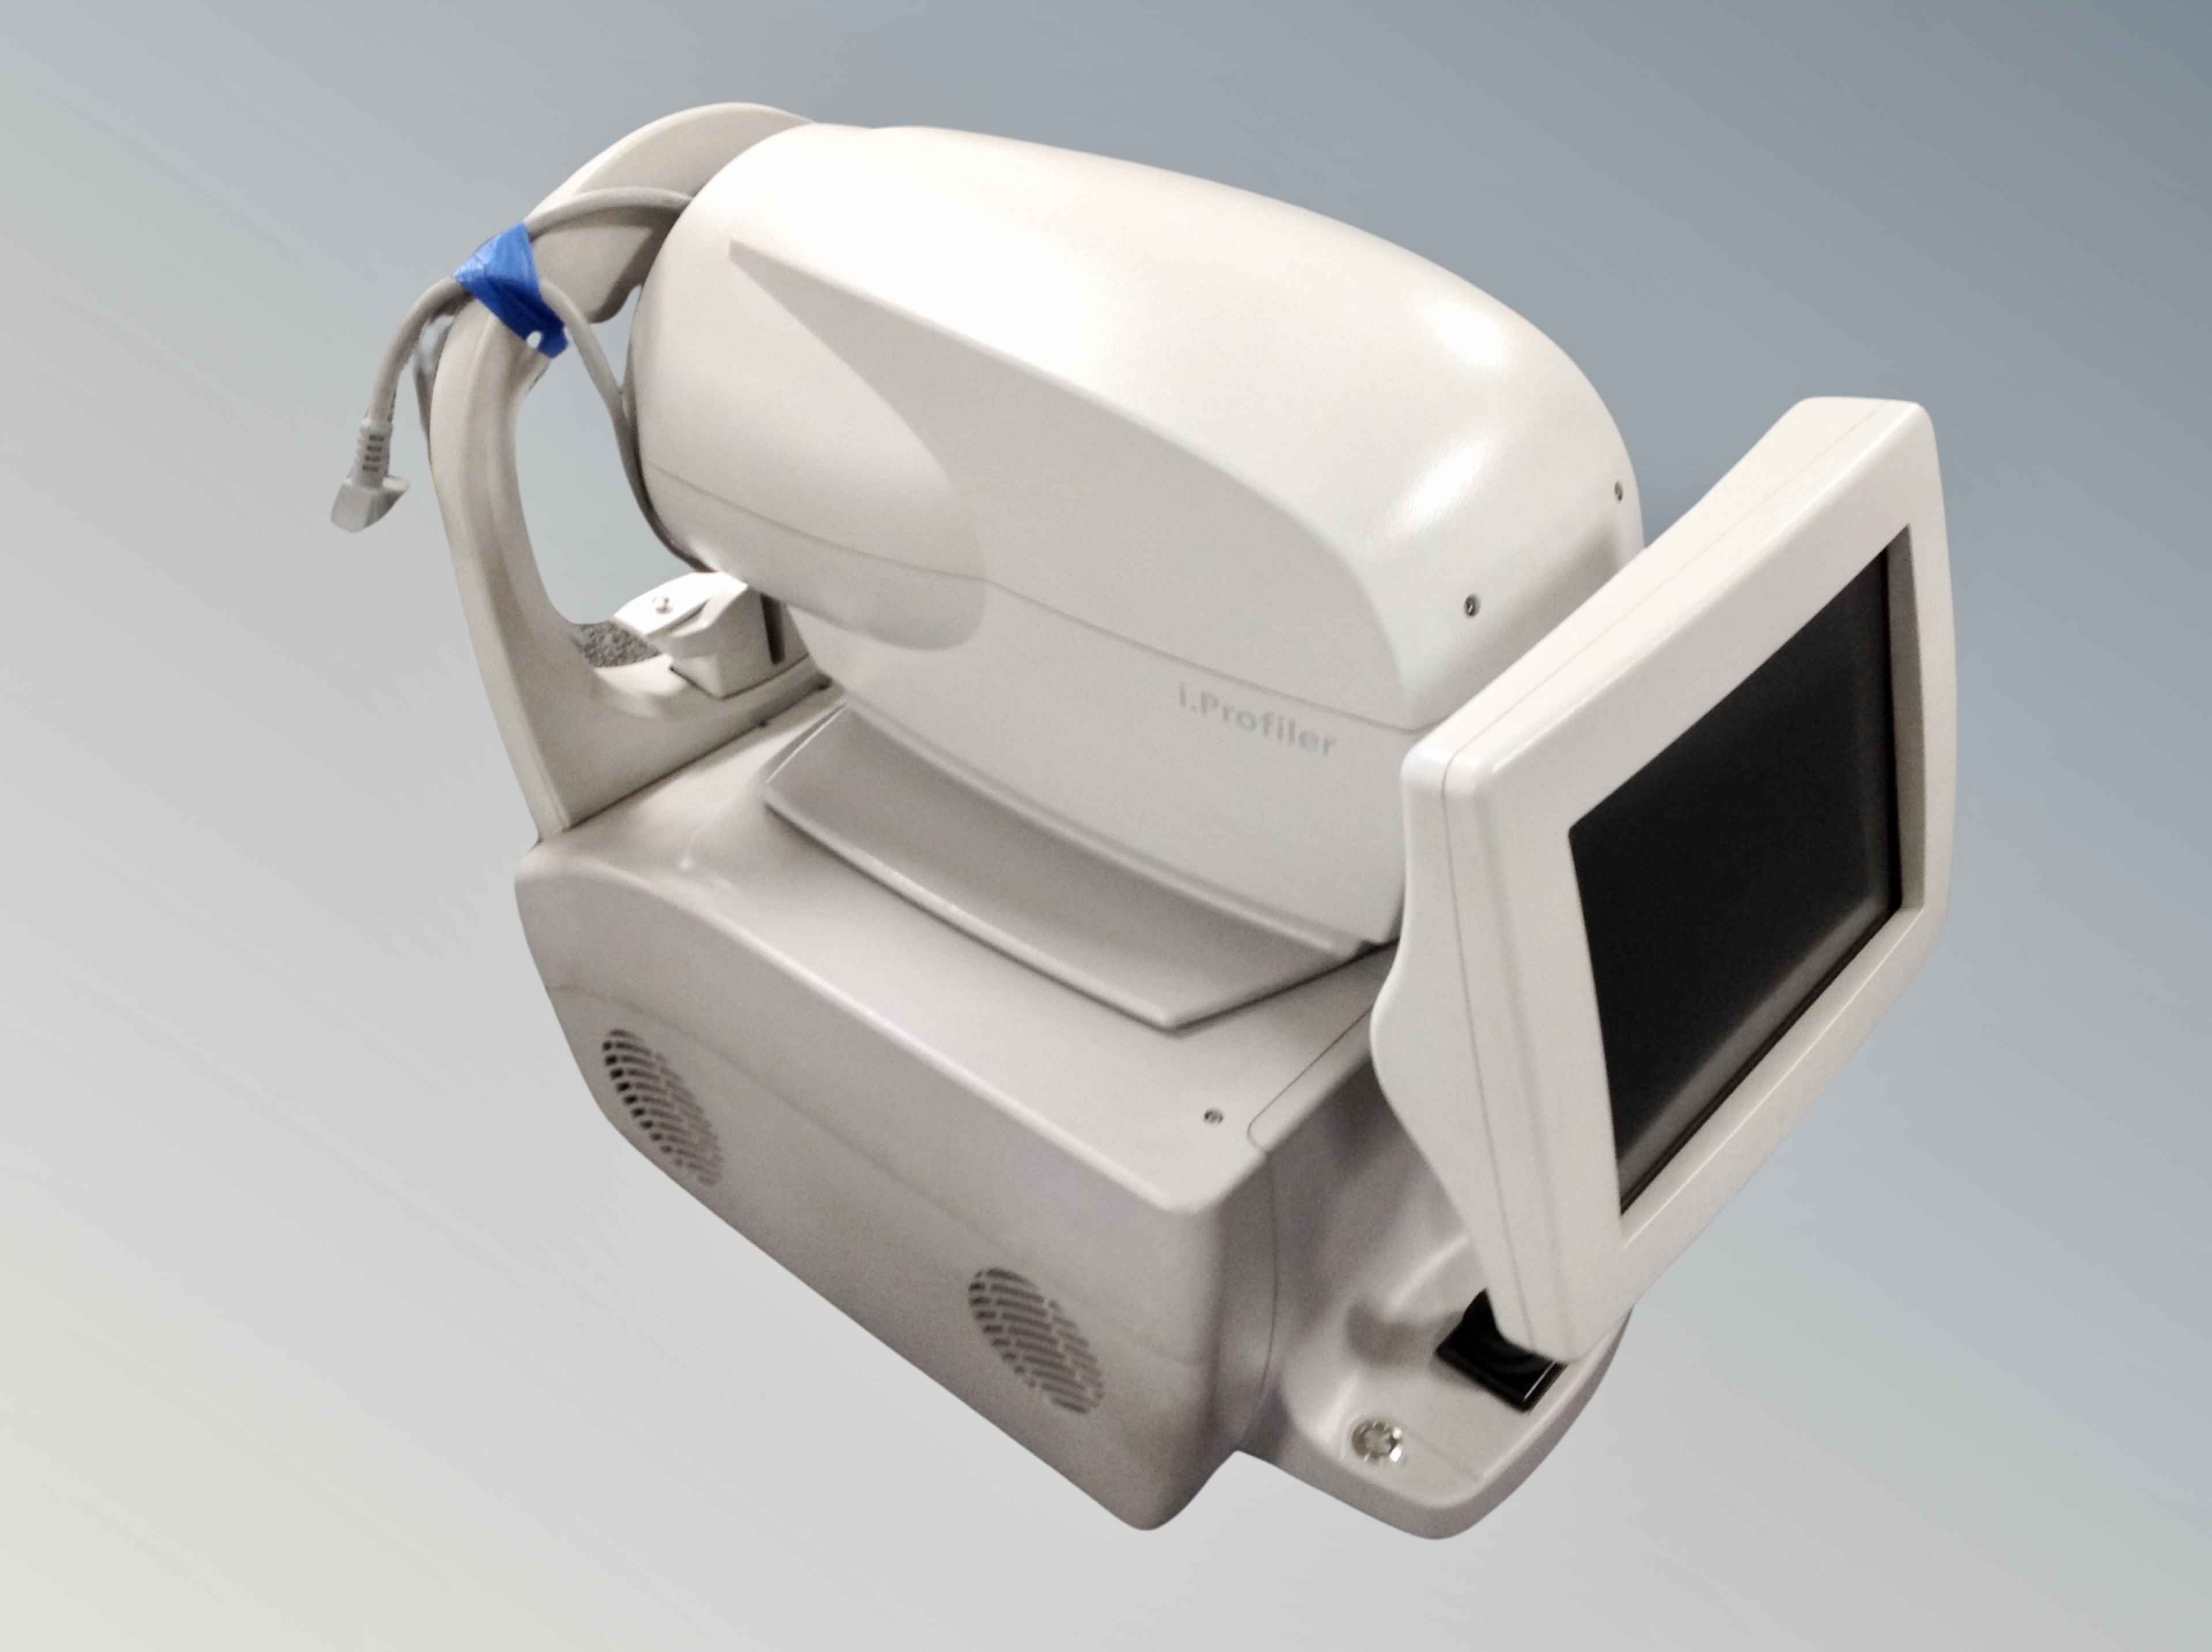 An i-Profiler optometry machine